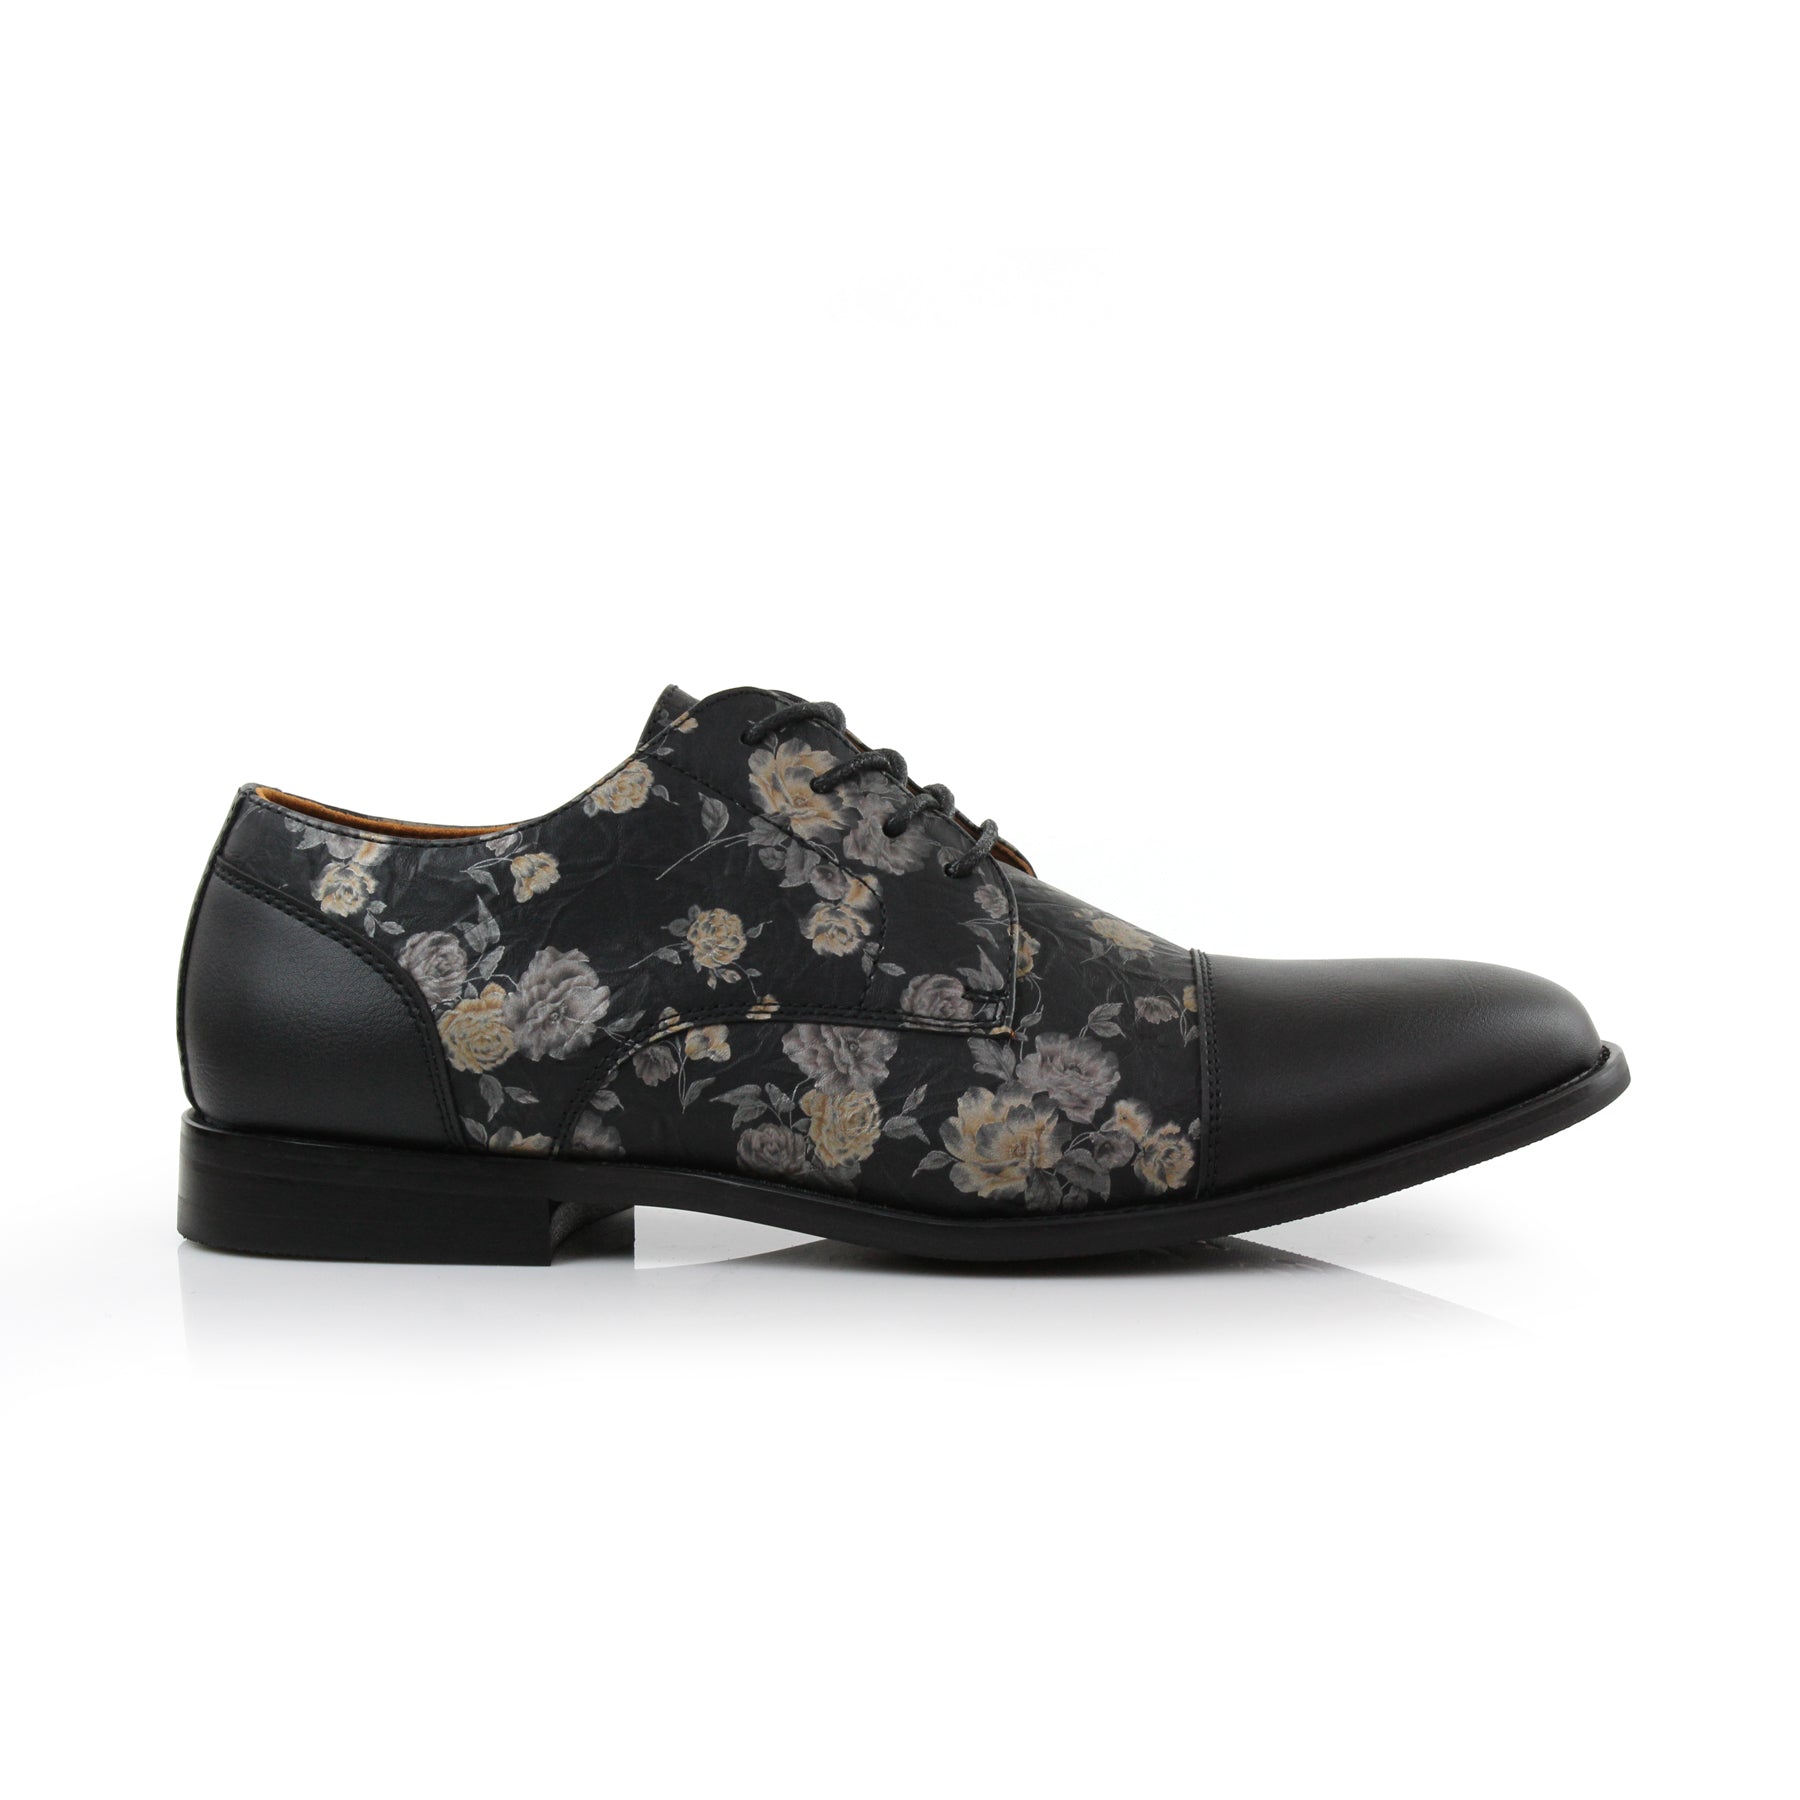 Floral Cap-Toe Derby Shoes | Berkley by Ferro Aldo | Conal Footwear | Outer Side Angle View